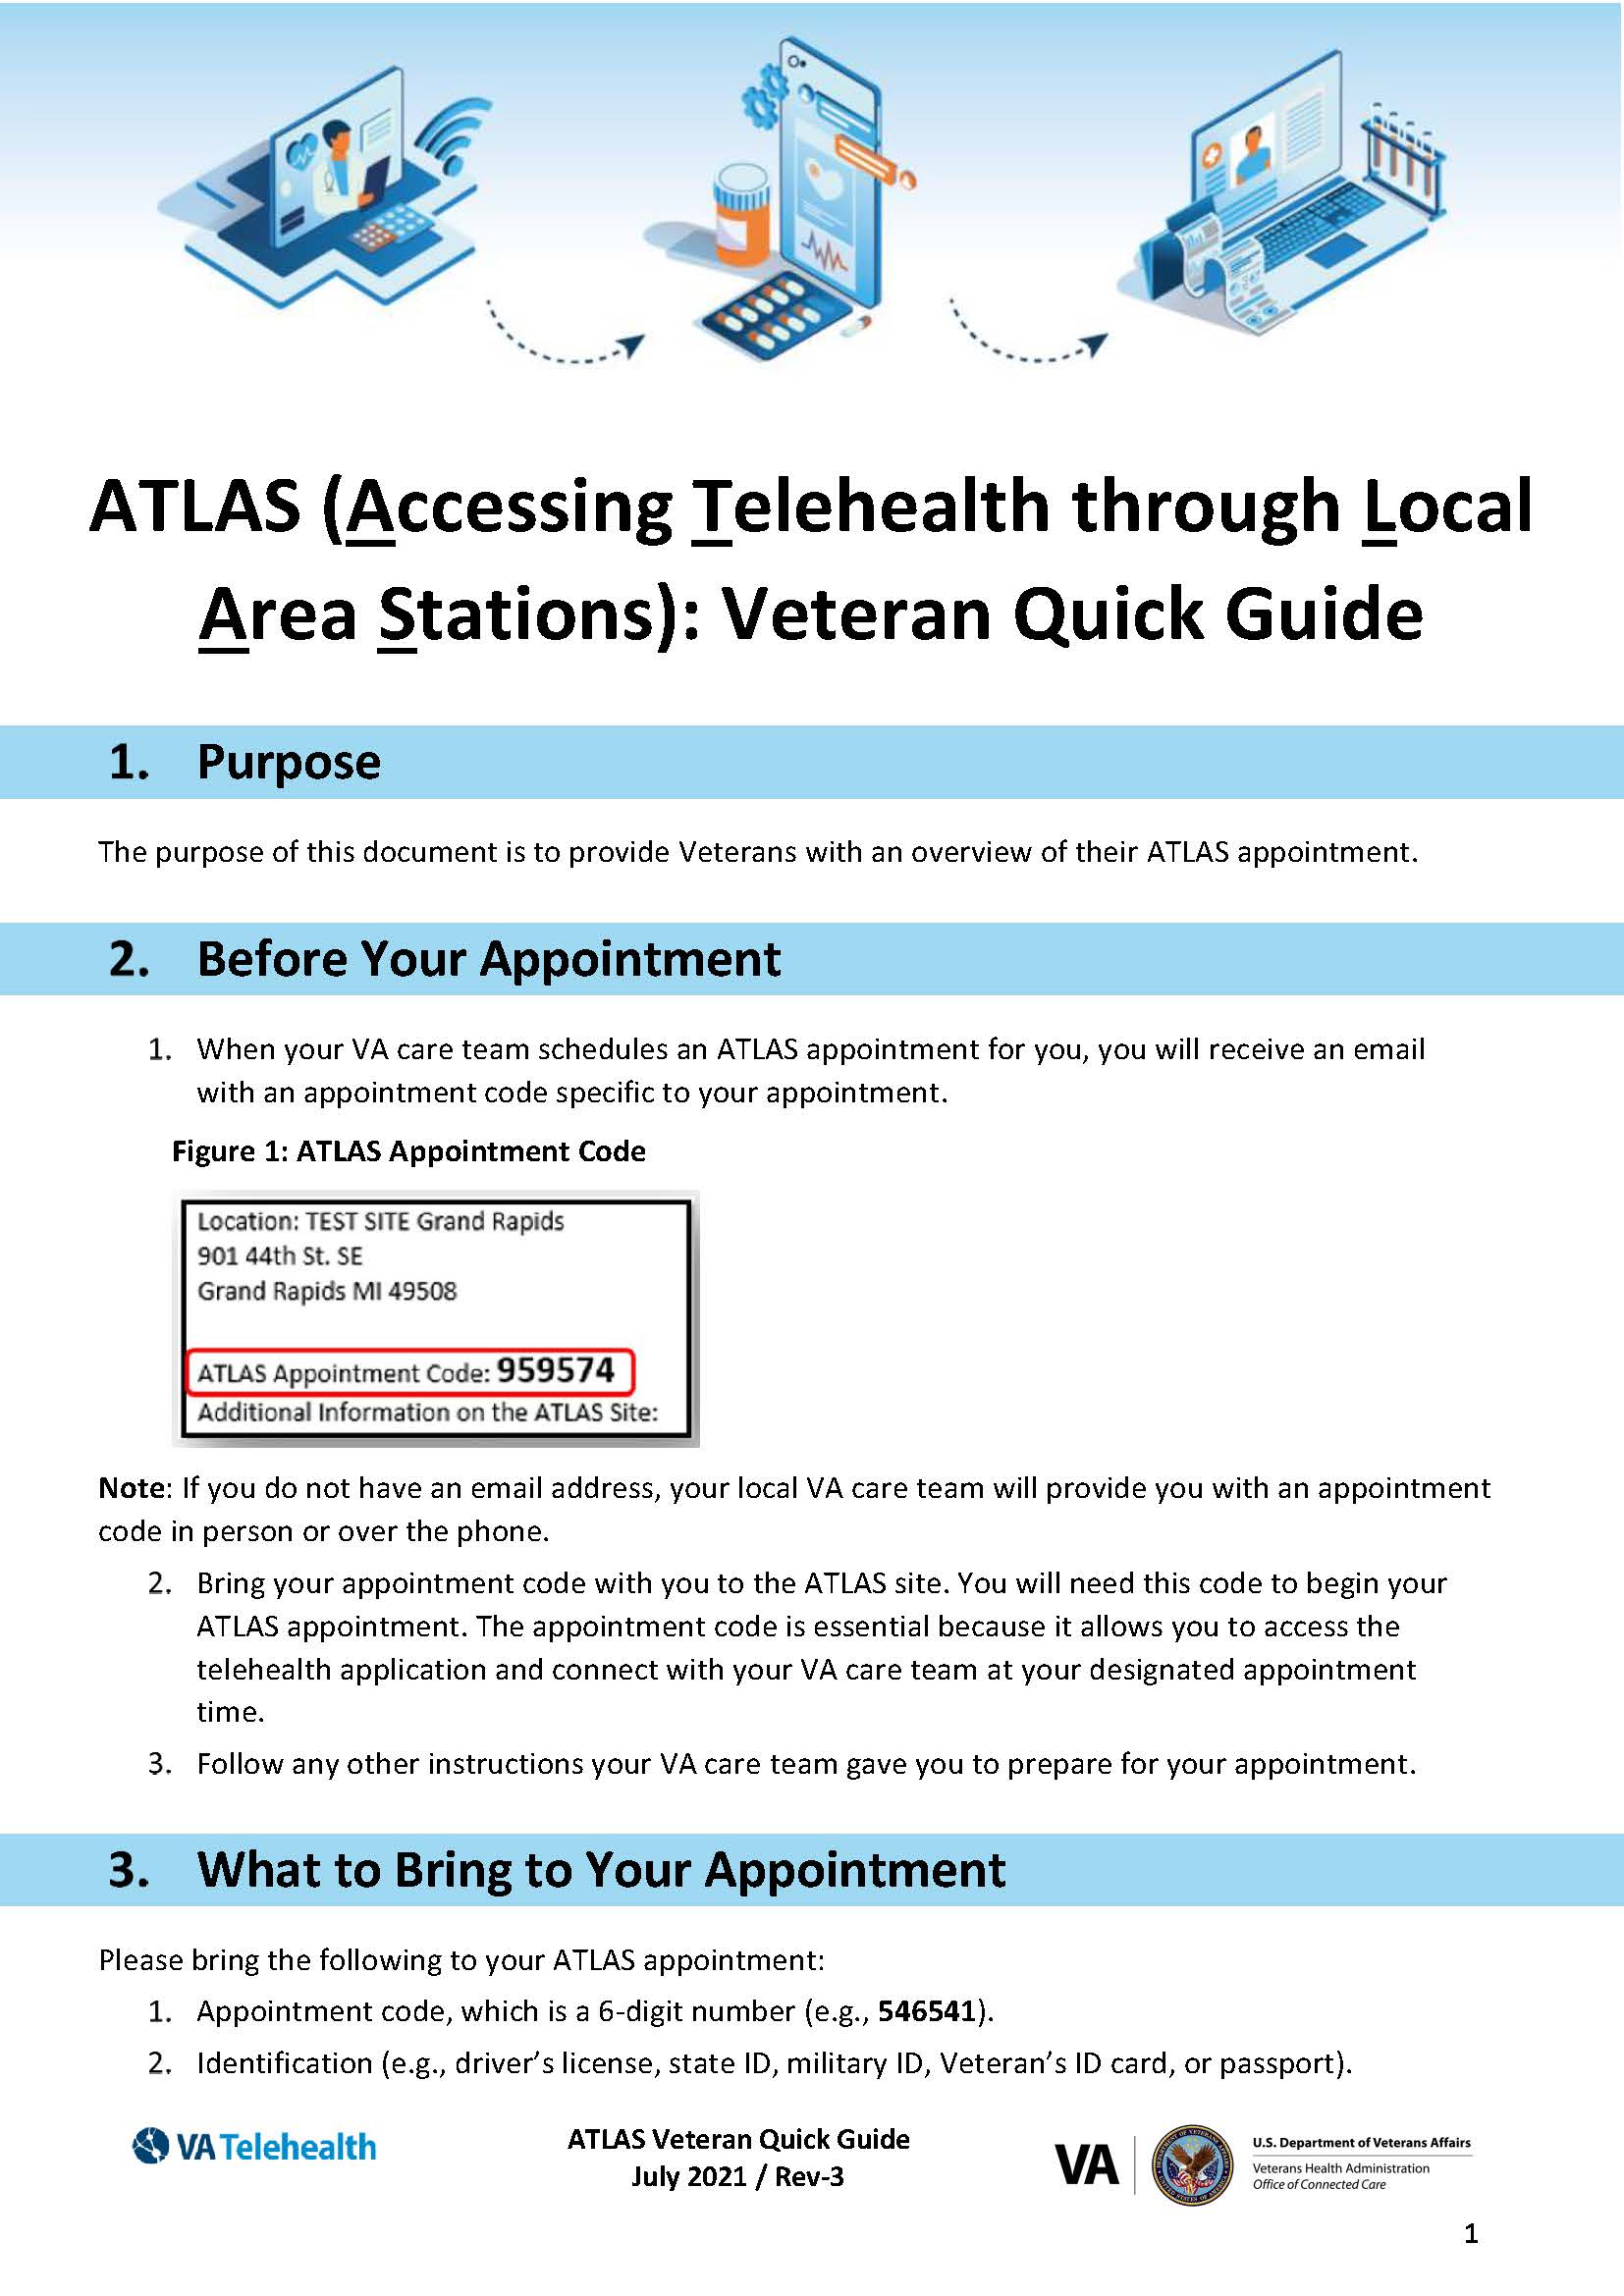 ATLAS Veteran Quick Guide cover